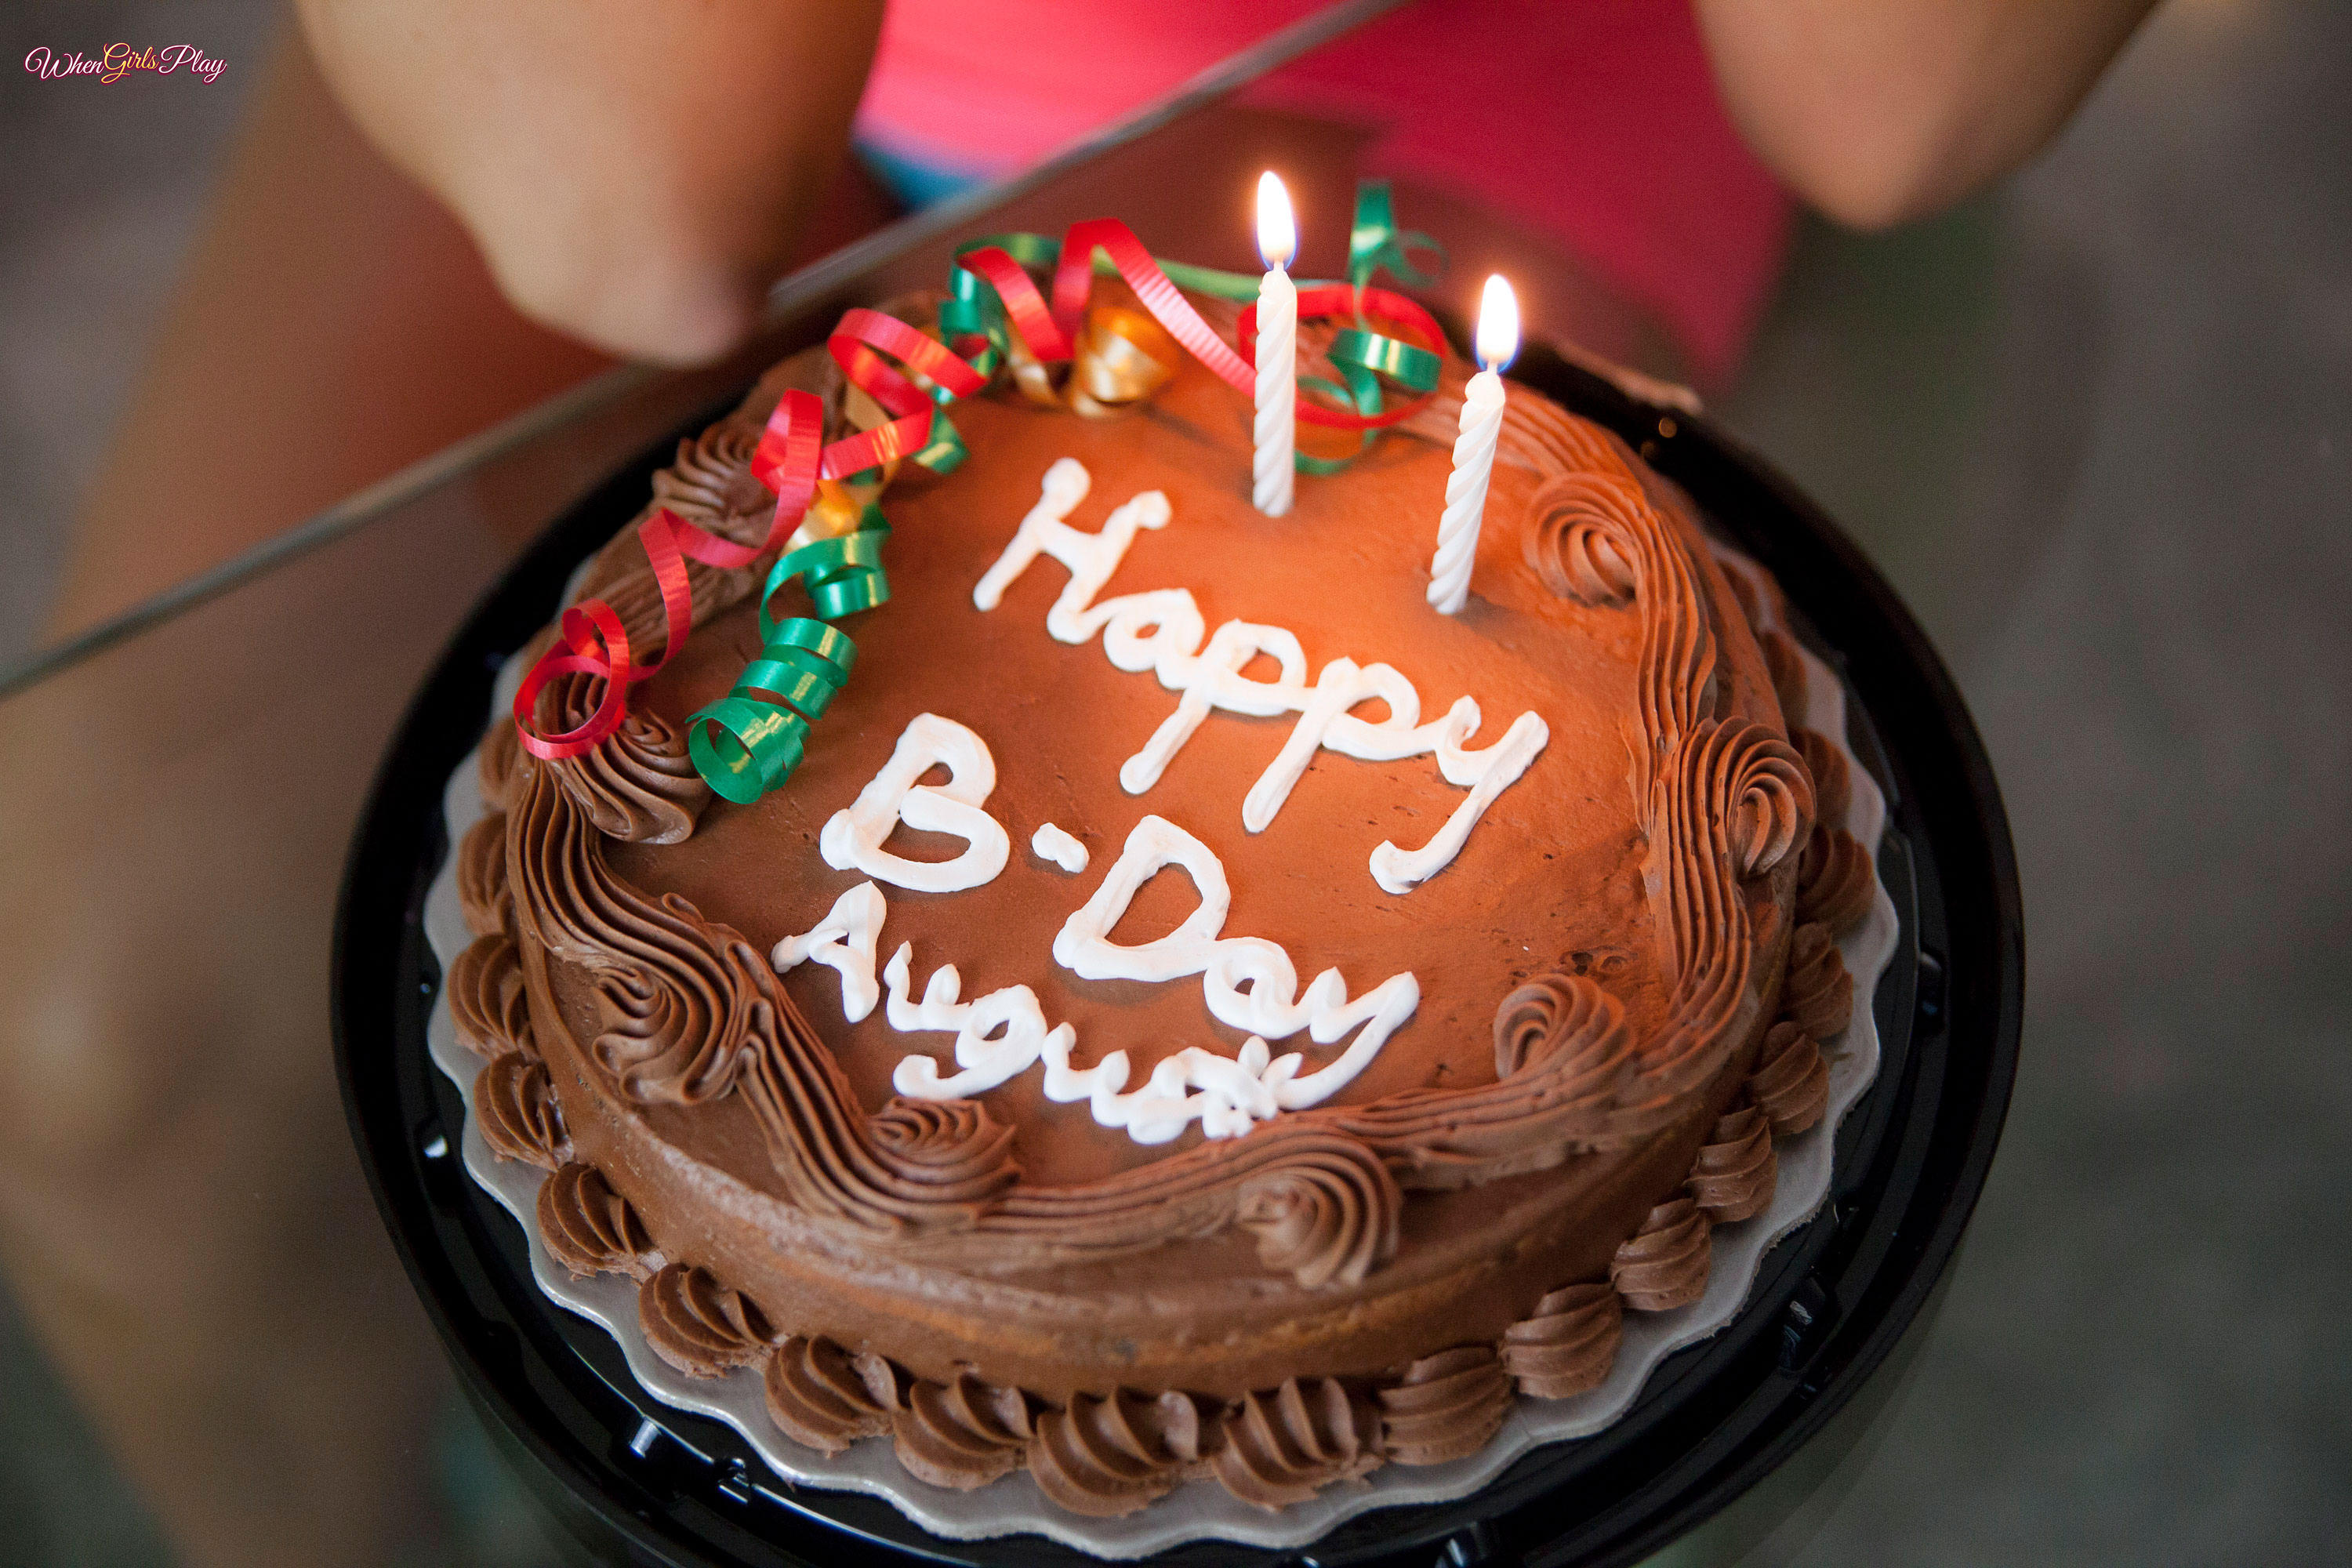 Twistys 'August's Birthday Wish' starring Abigail Mac (Photo 1)